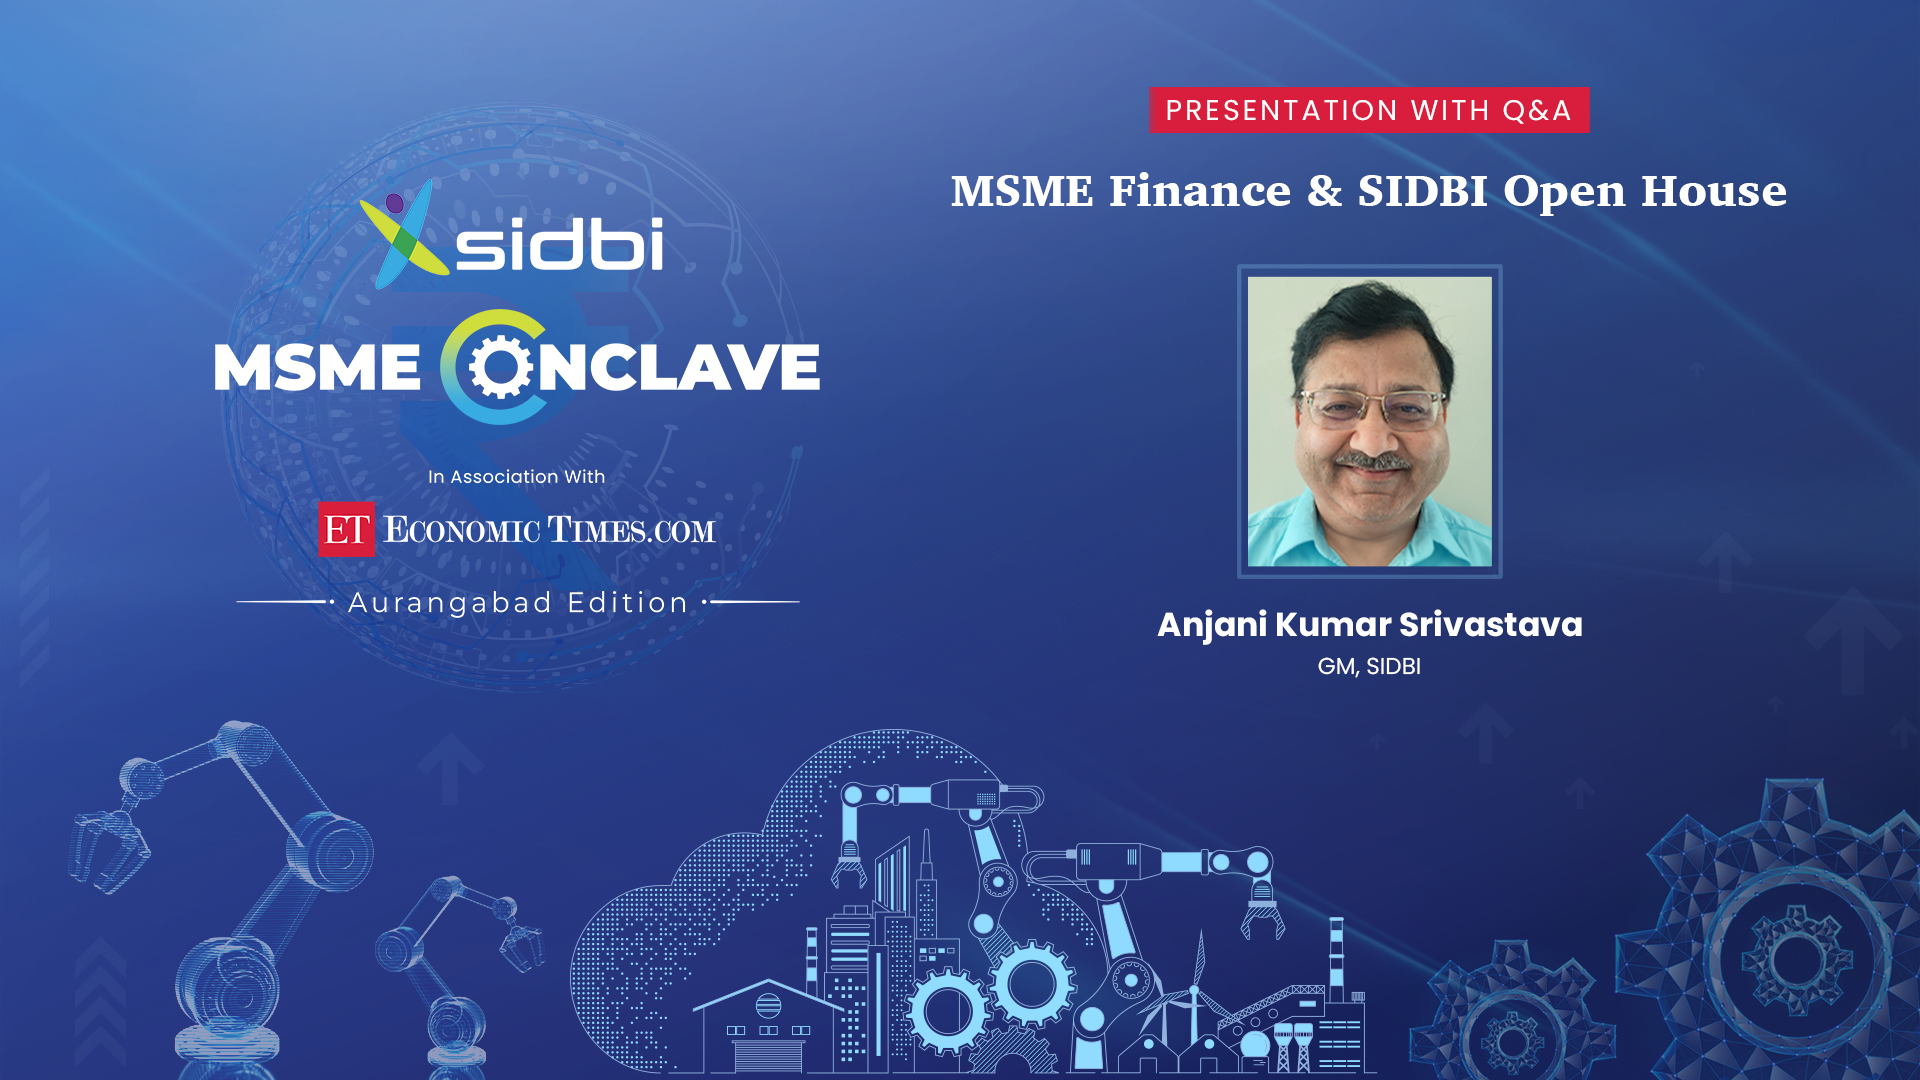 MSME Finance & SIDBI Open House